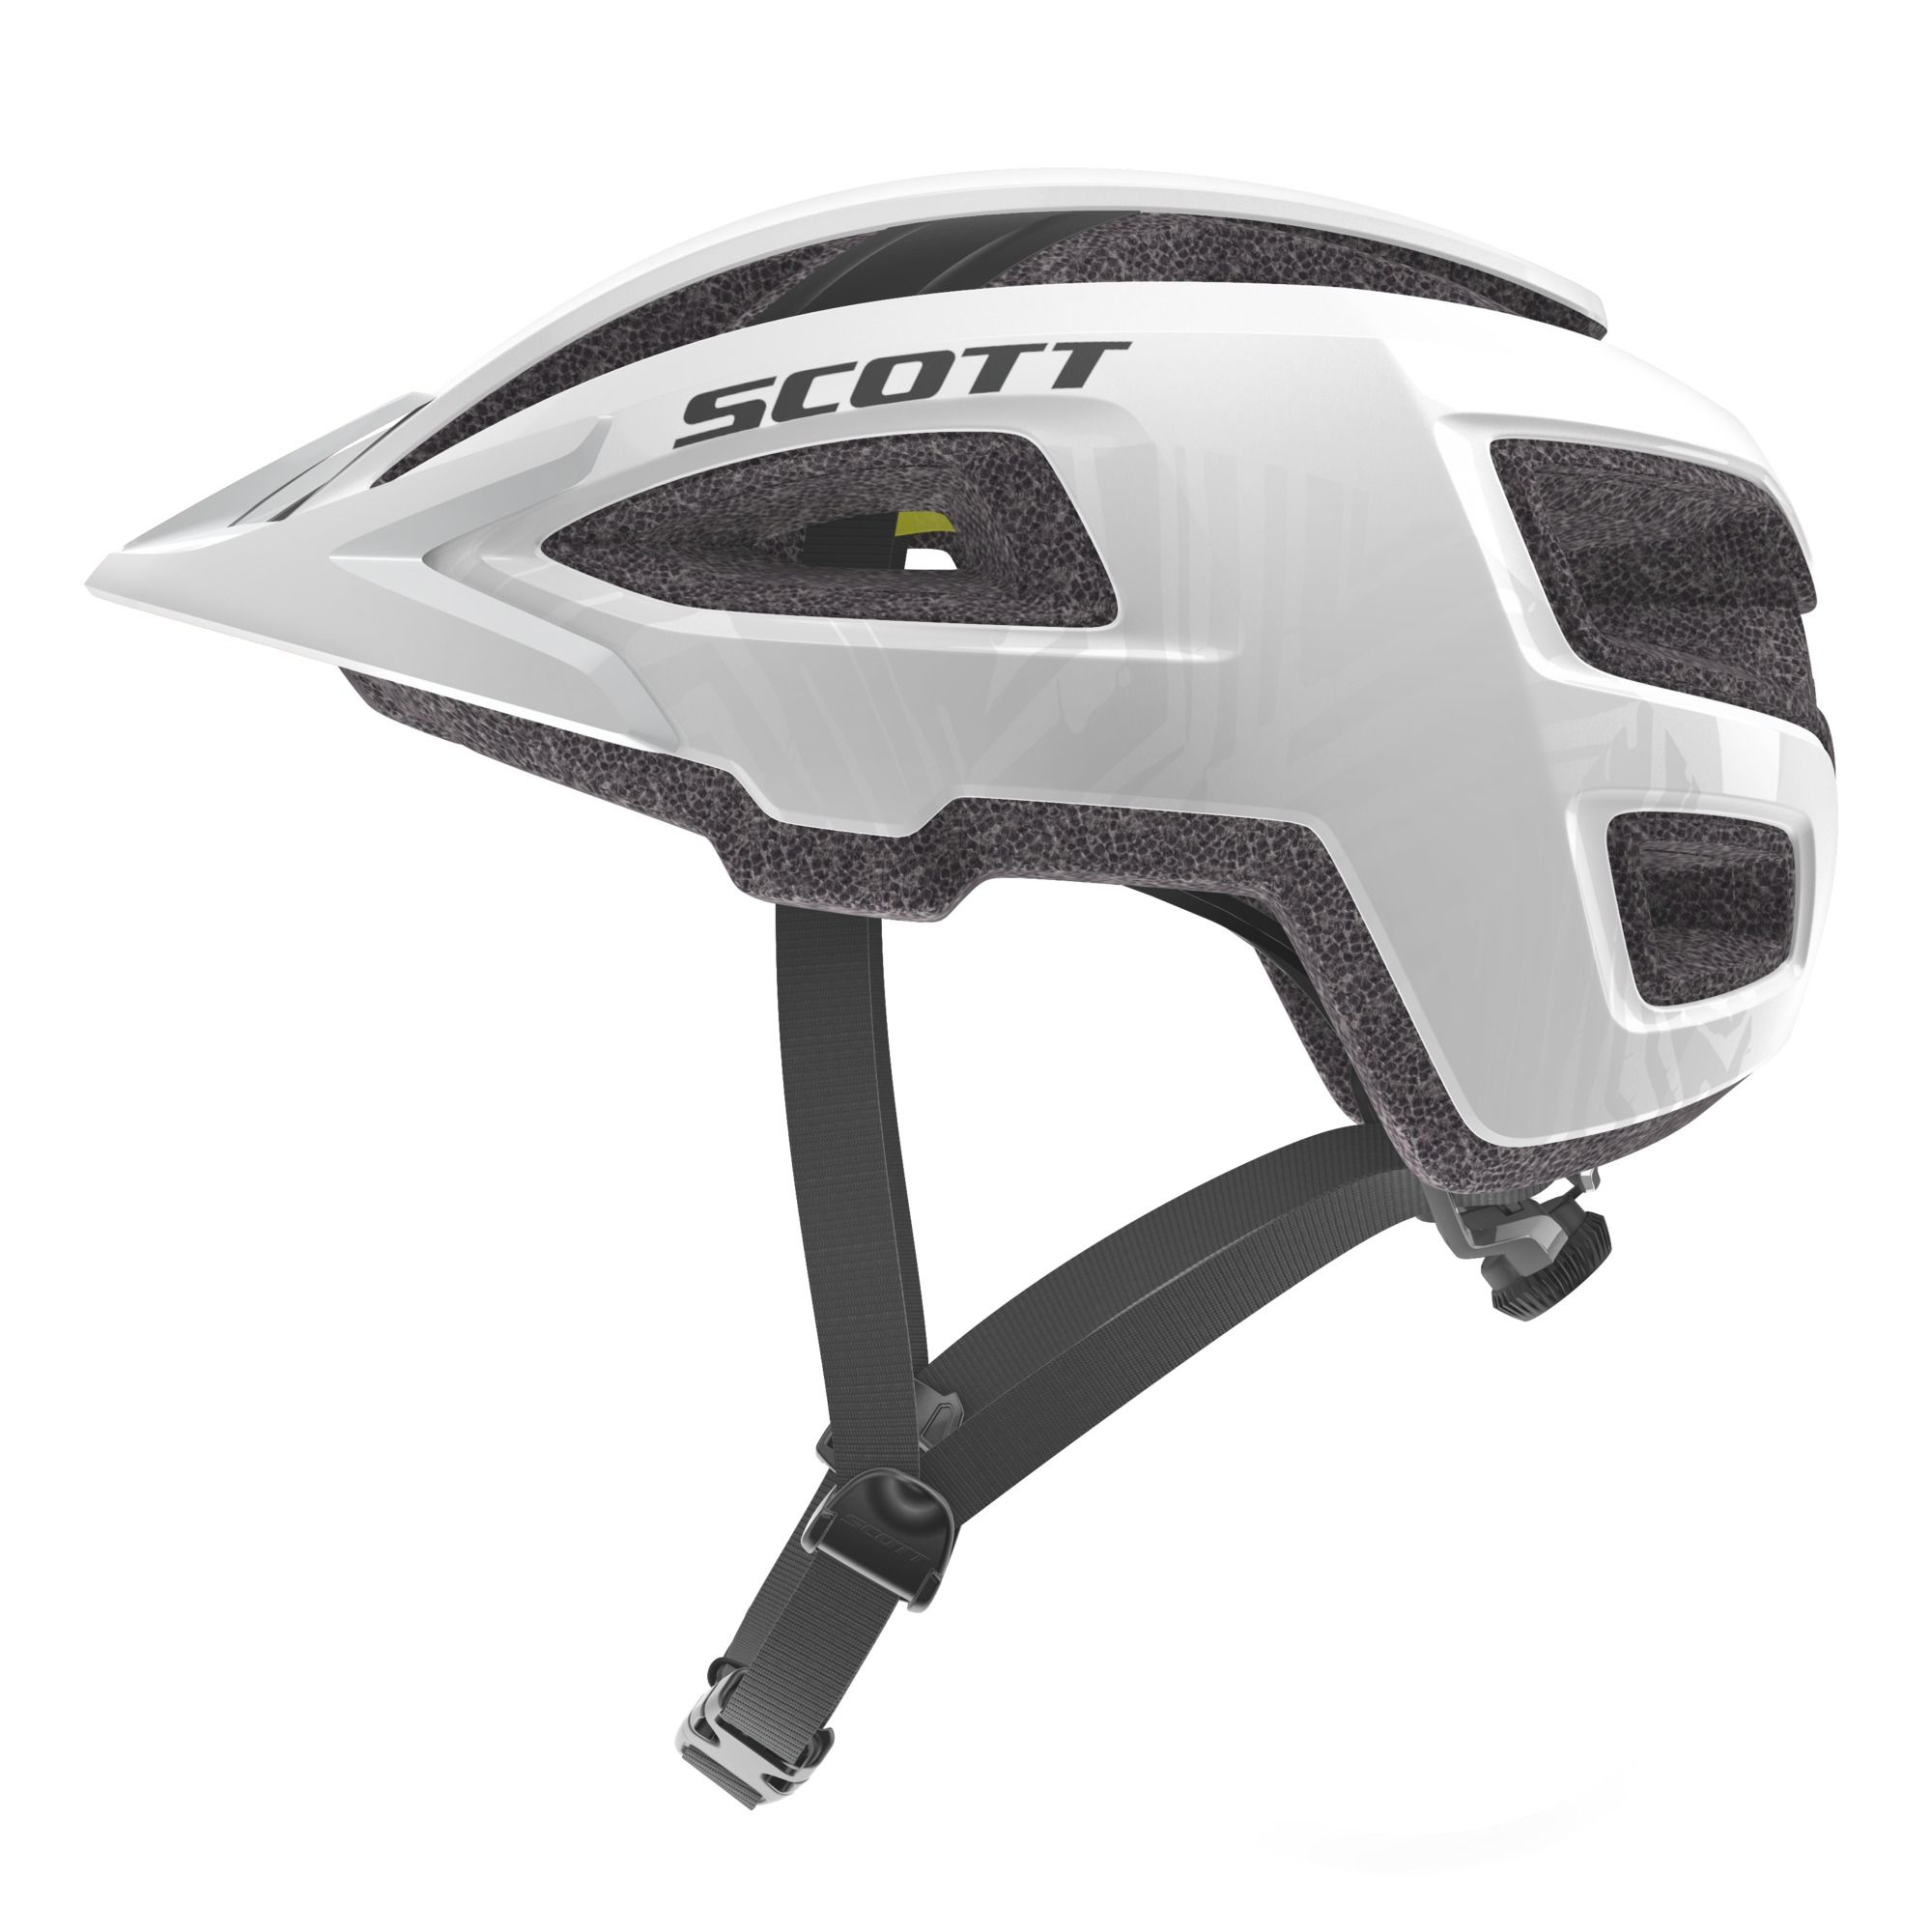 Black Scott Groove Plus MTB Cycling Helmet